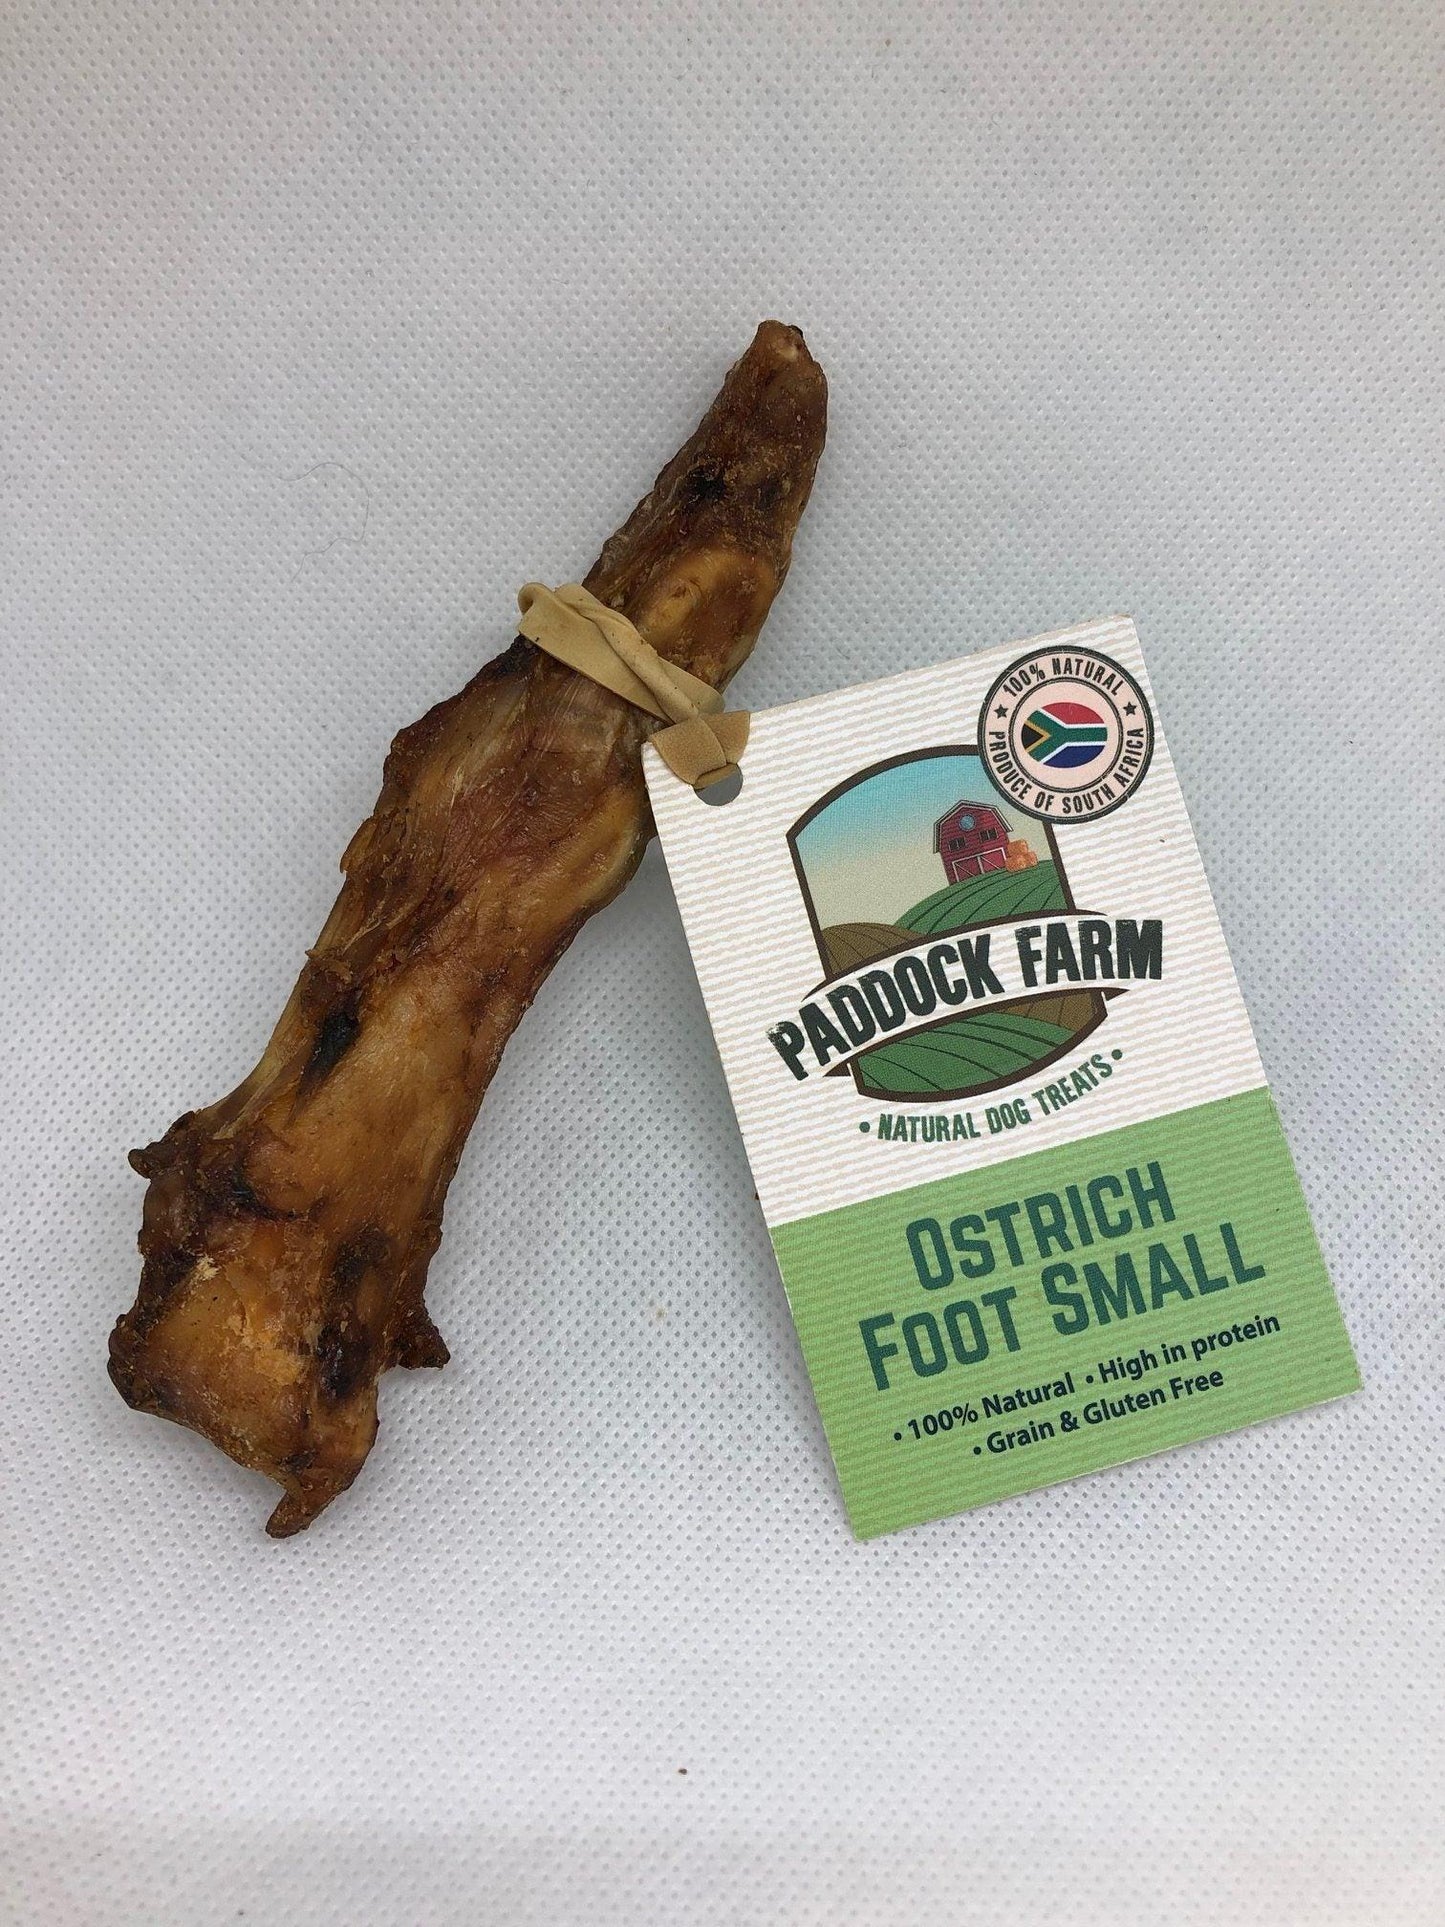 Ostrich Foot Small - North East Pet Shop Paddock Farm